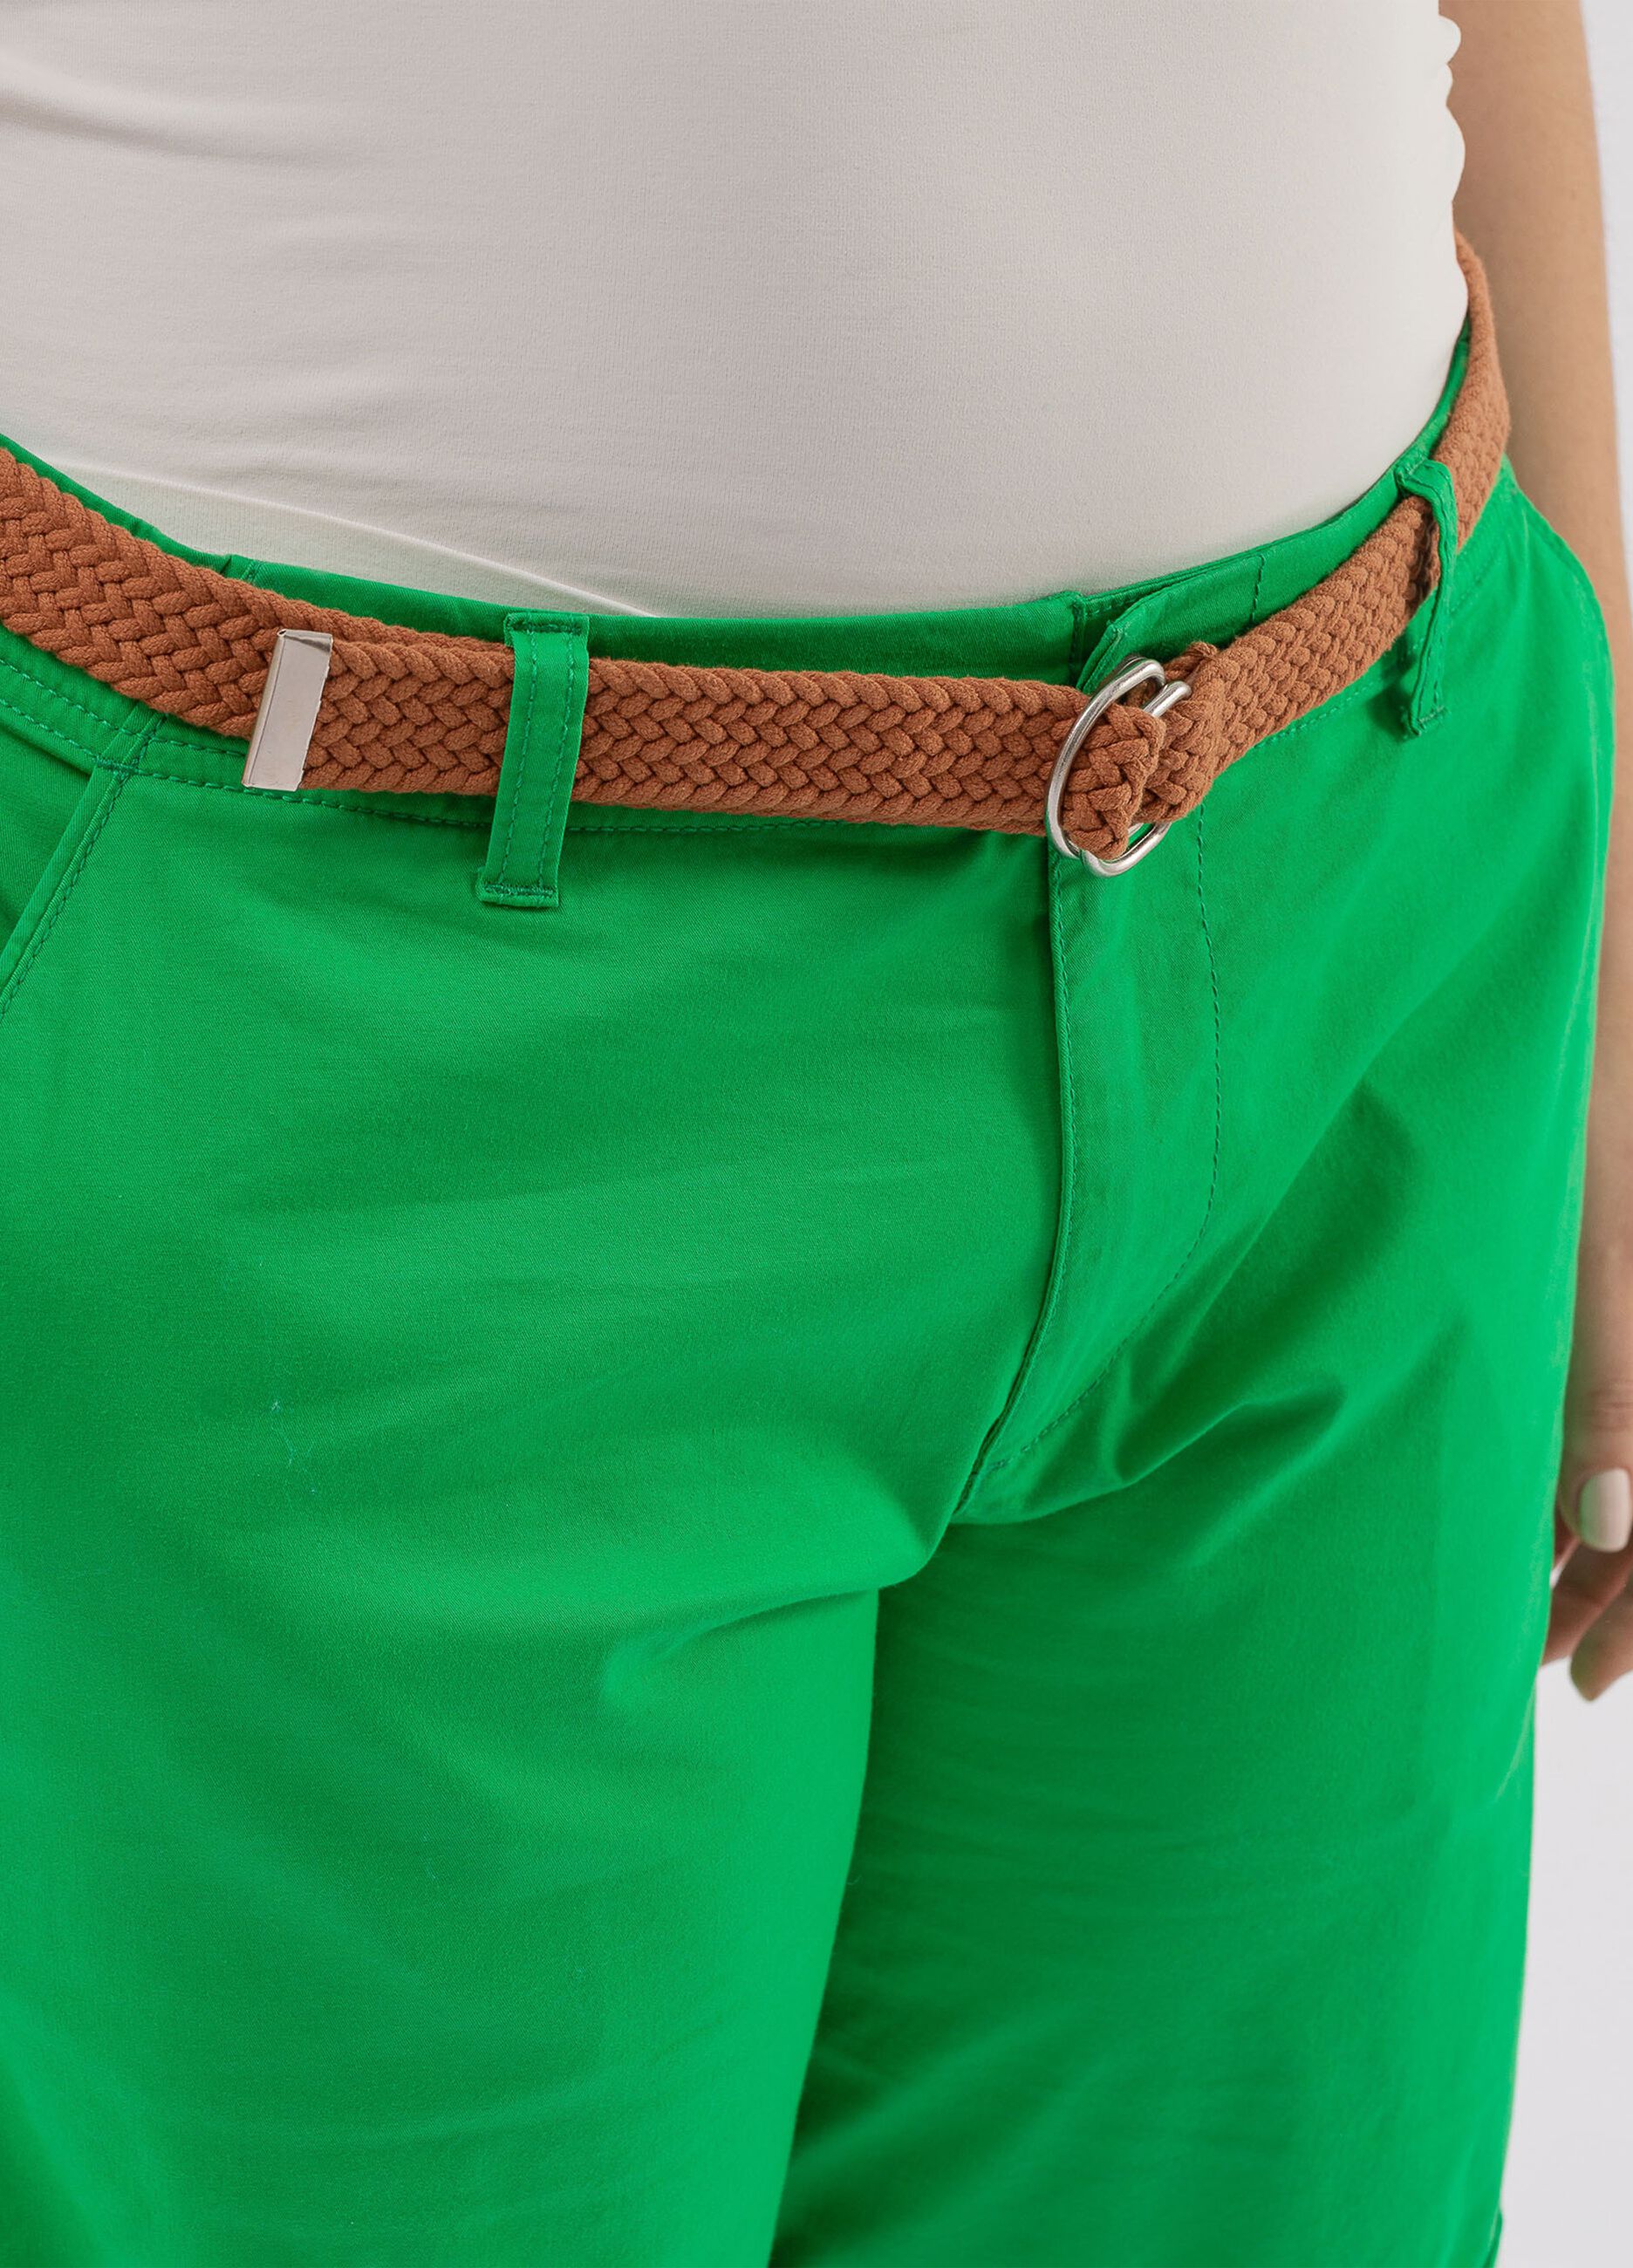 Curvy chino shorts with belt